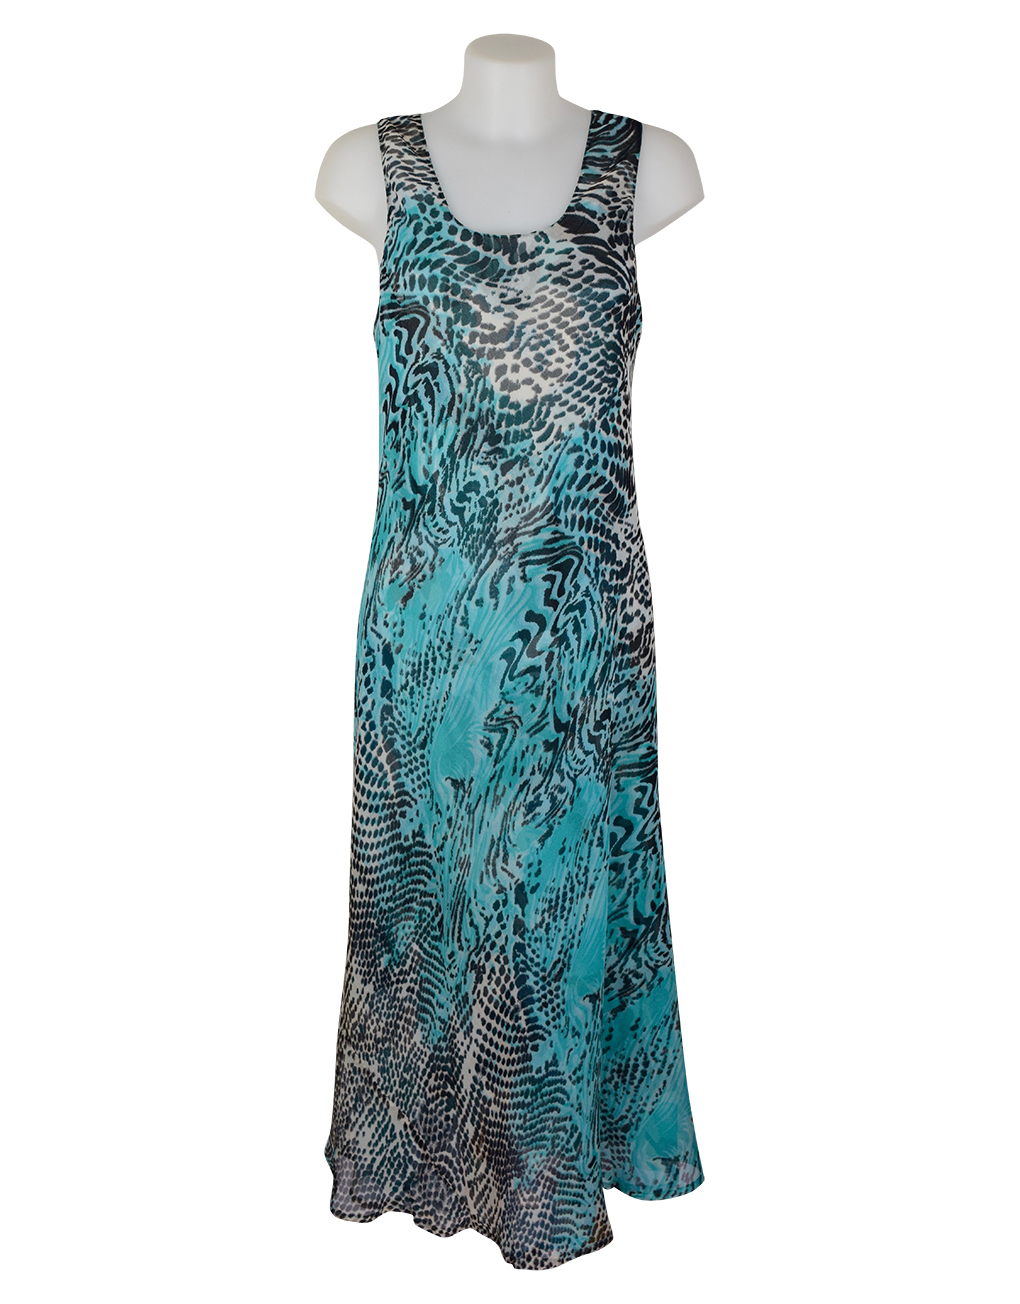 Women's Reversible Patterned Summer Dress | 2 in 1 Dress | Turquoise